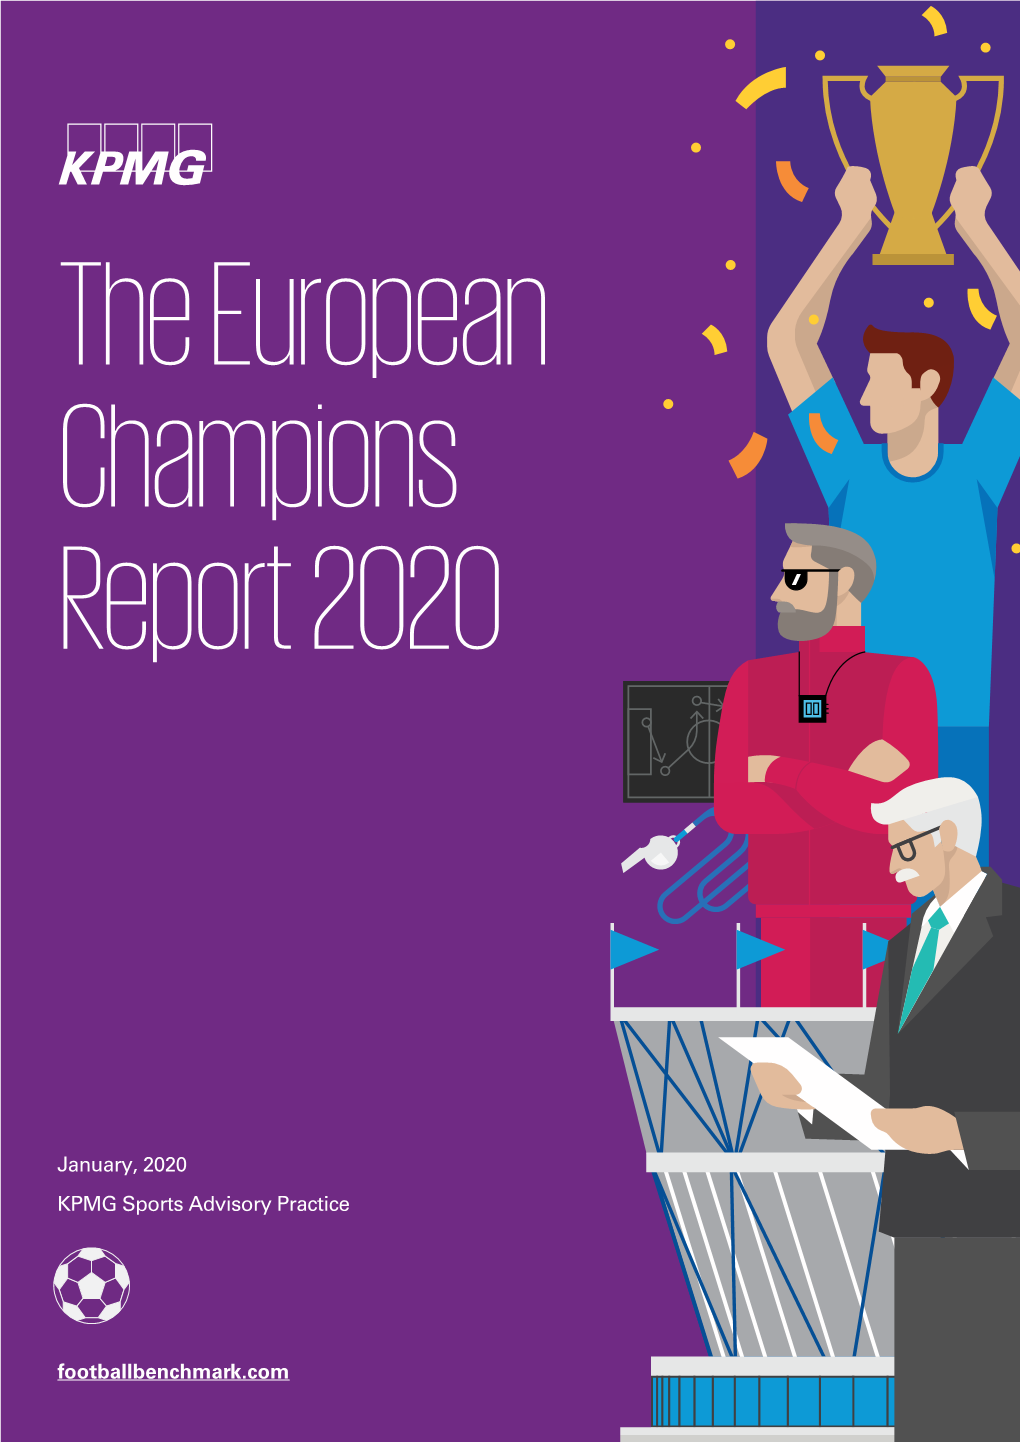 The European Champions Report 2020